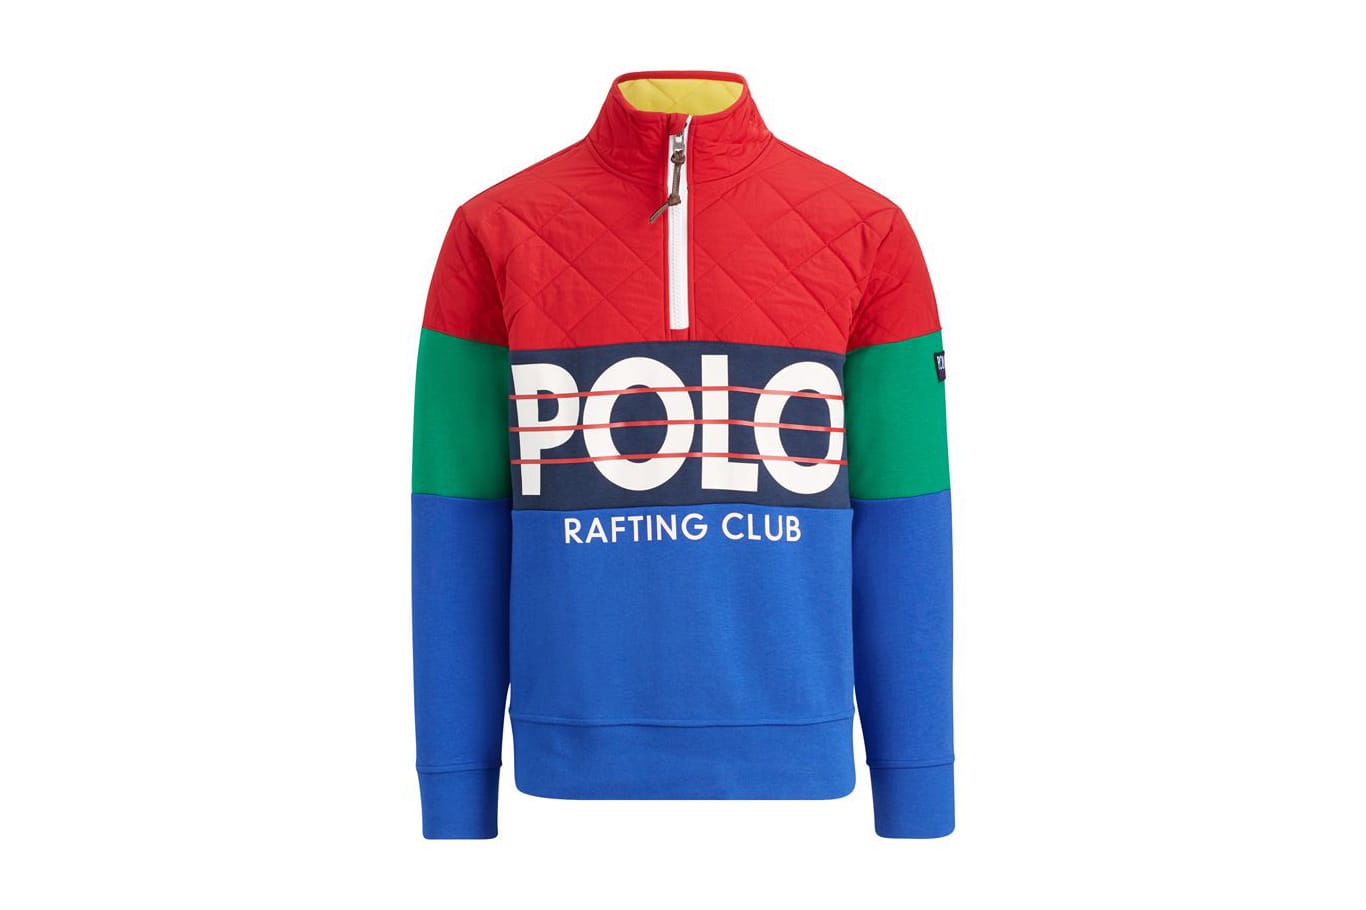 polo rafting club sweater